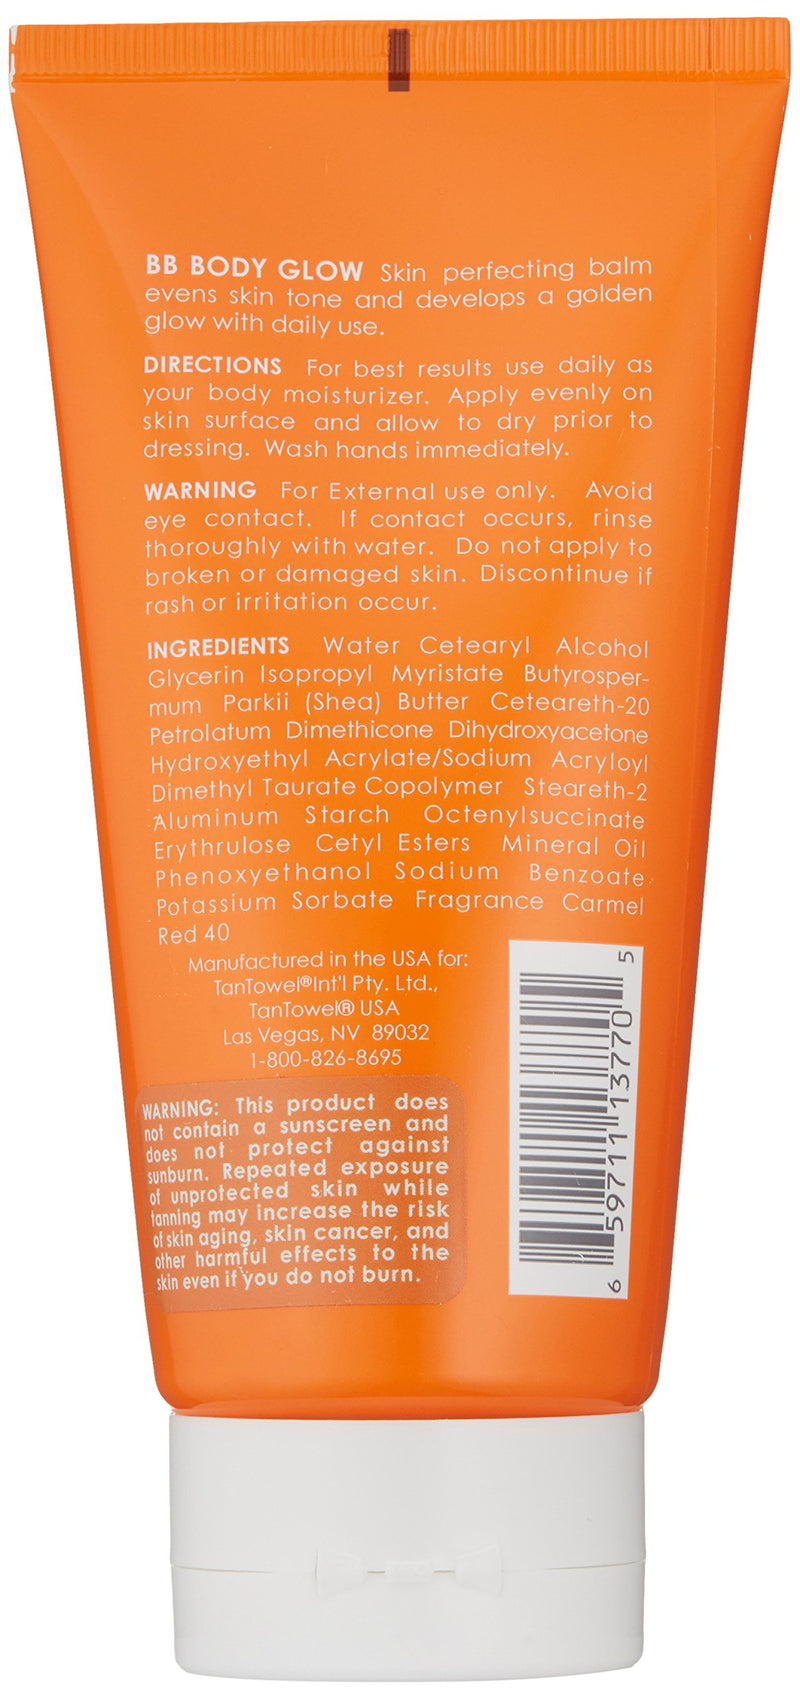 [Australia] - Tan Towel Gradual Self-Tanning Body Perfecting Cream, 5.7 Fl Oz 